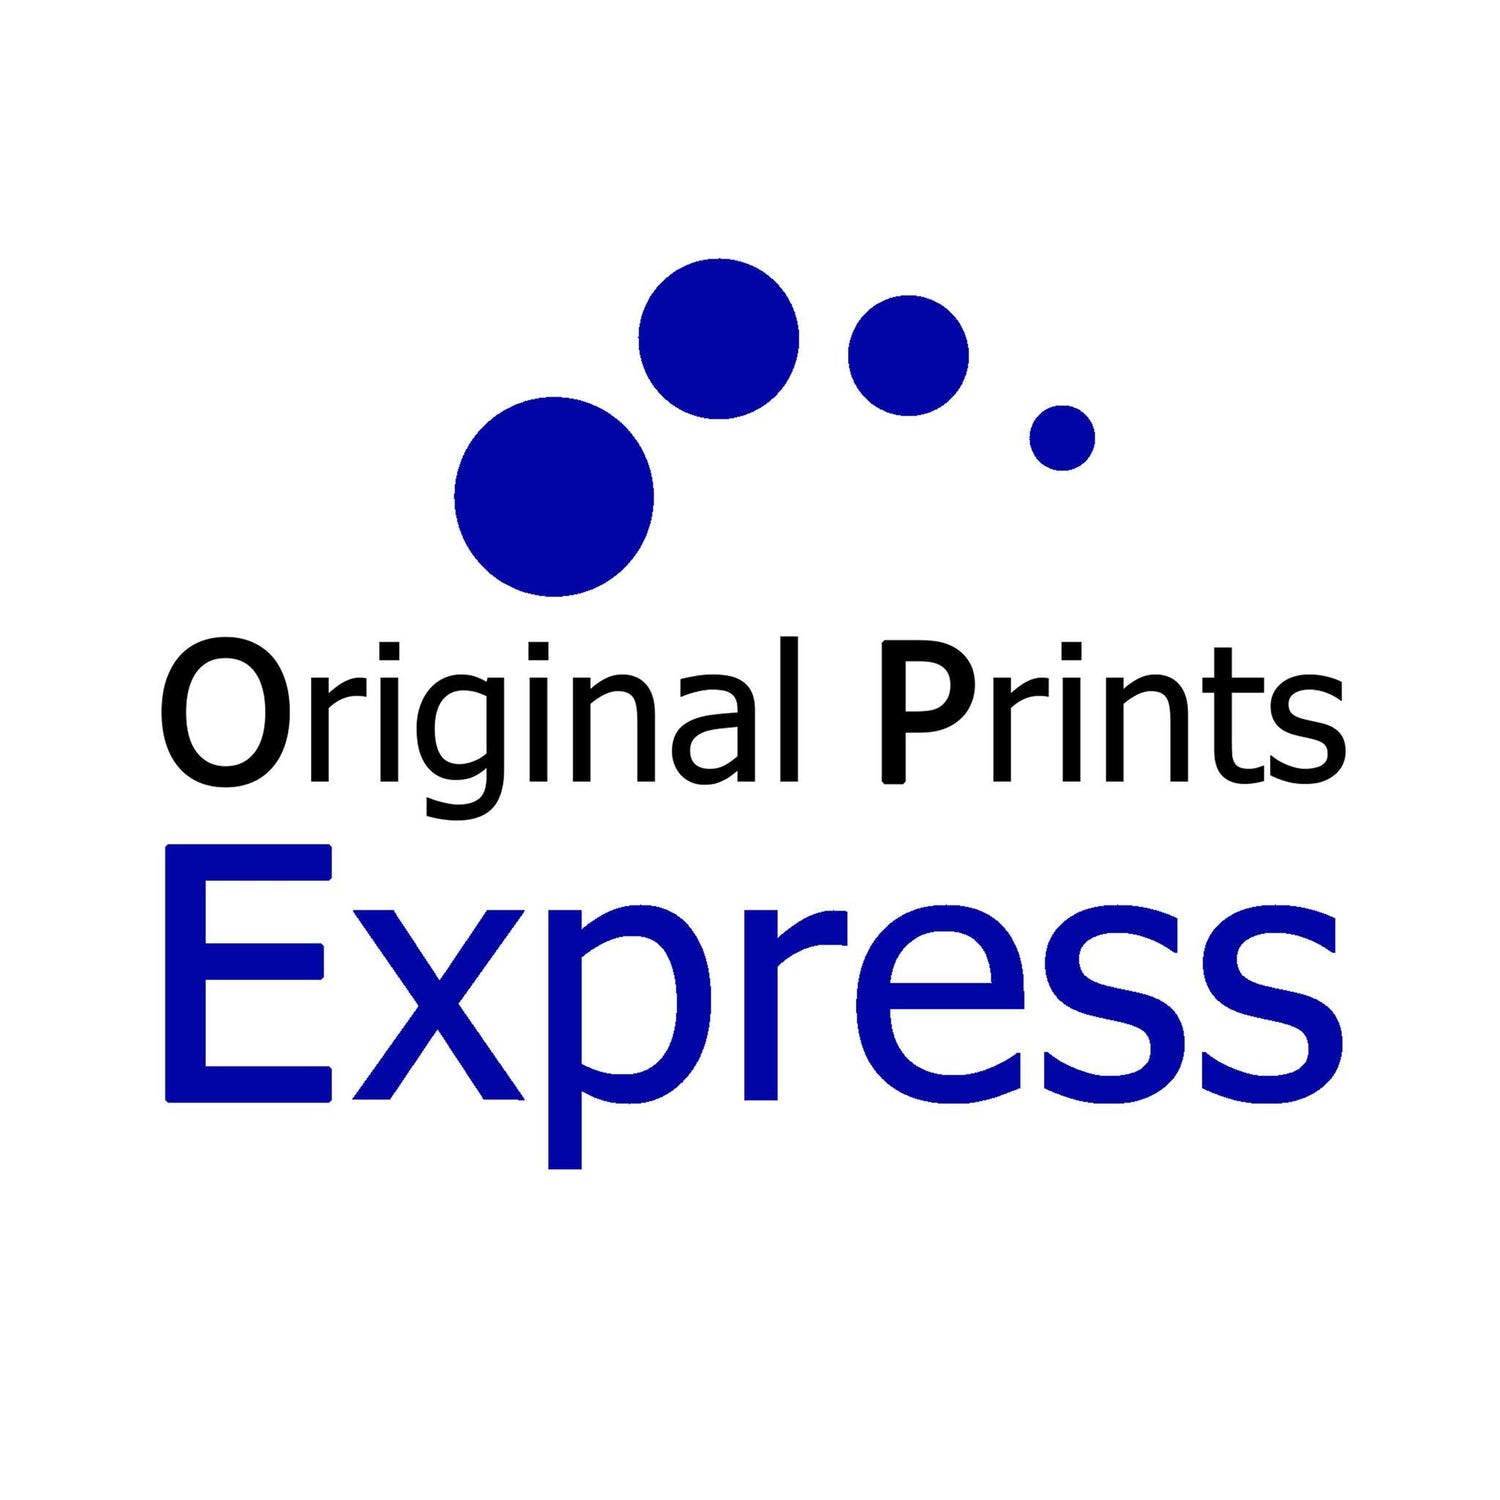 Original Prints Express